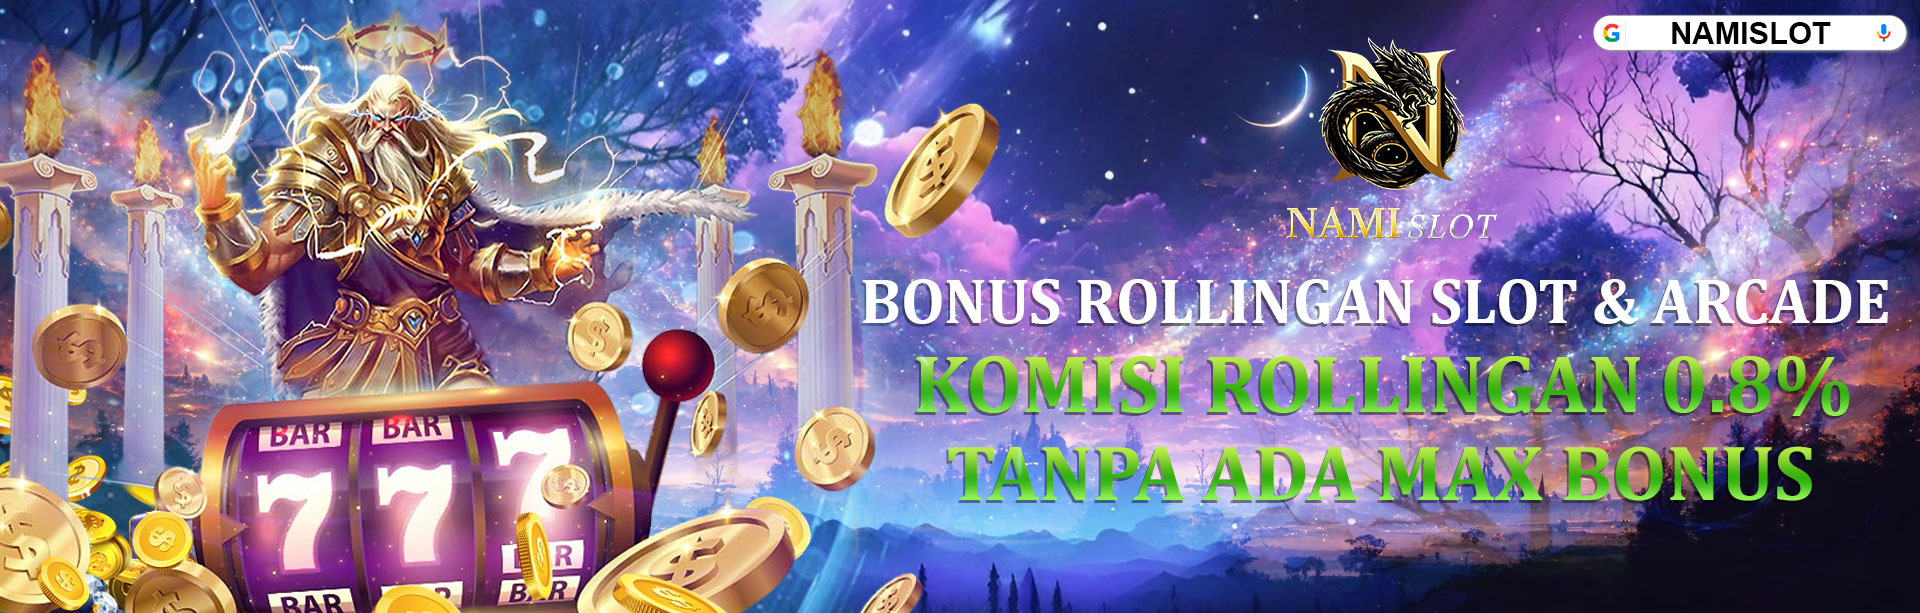 Bonus_Rollingan